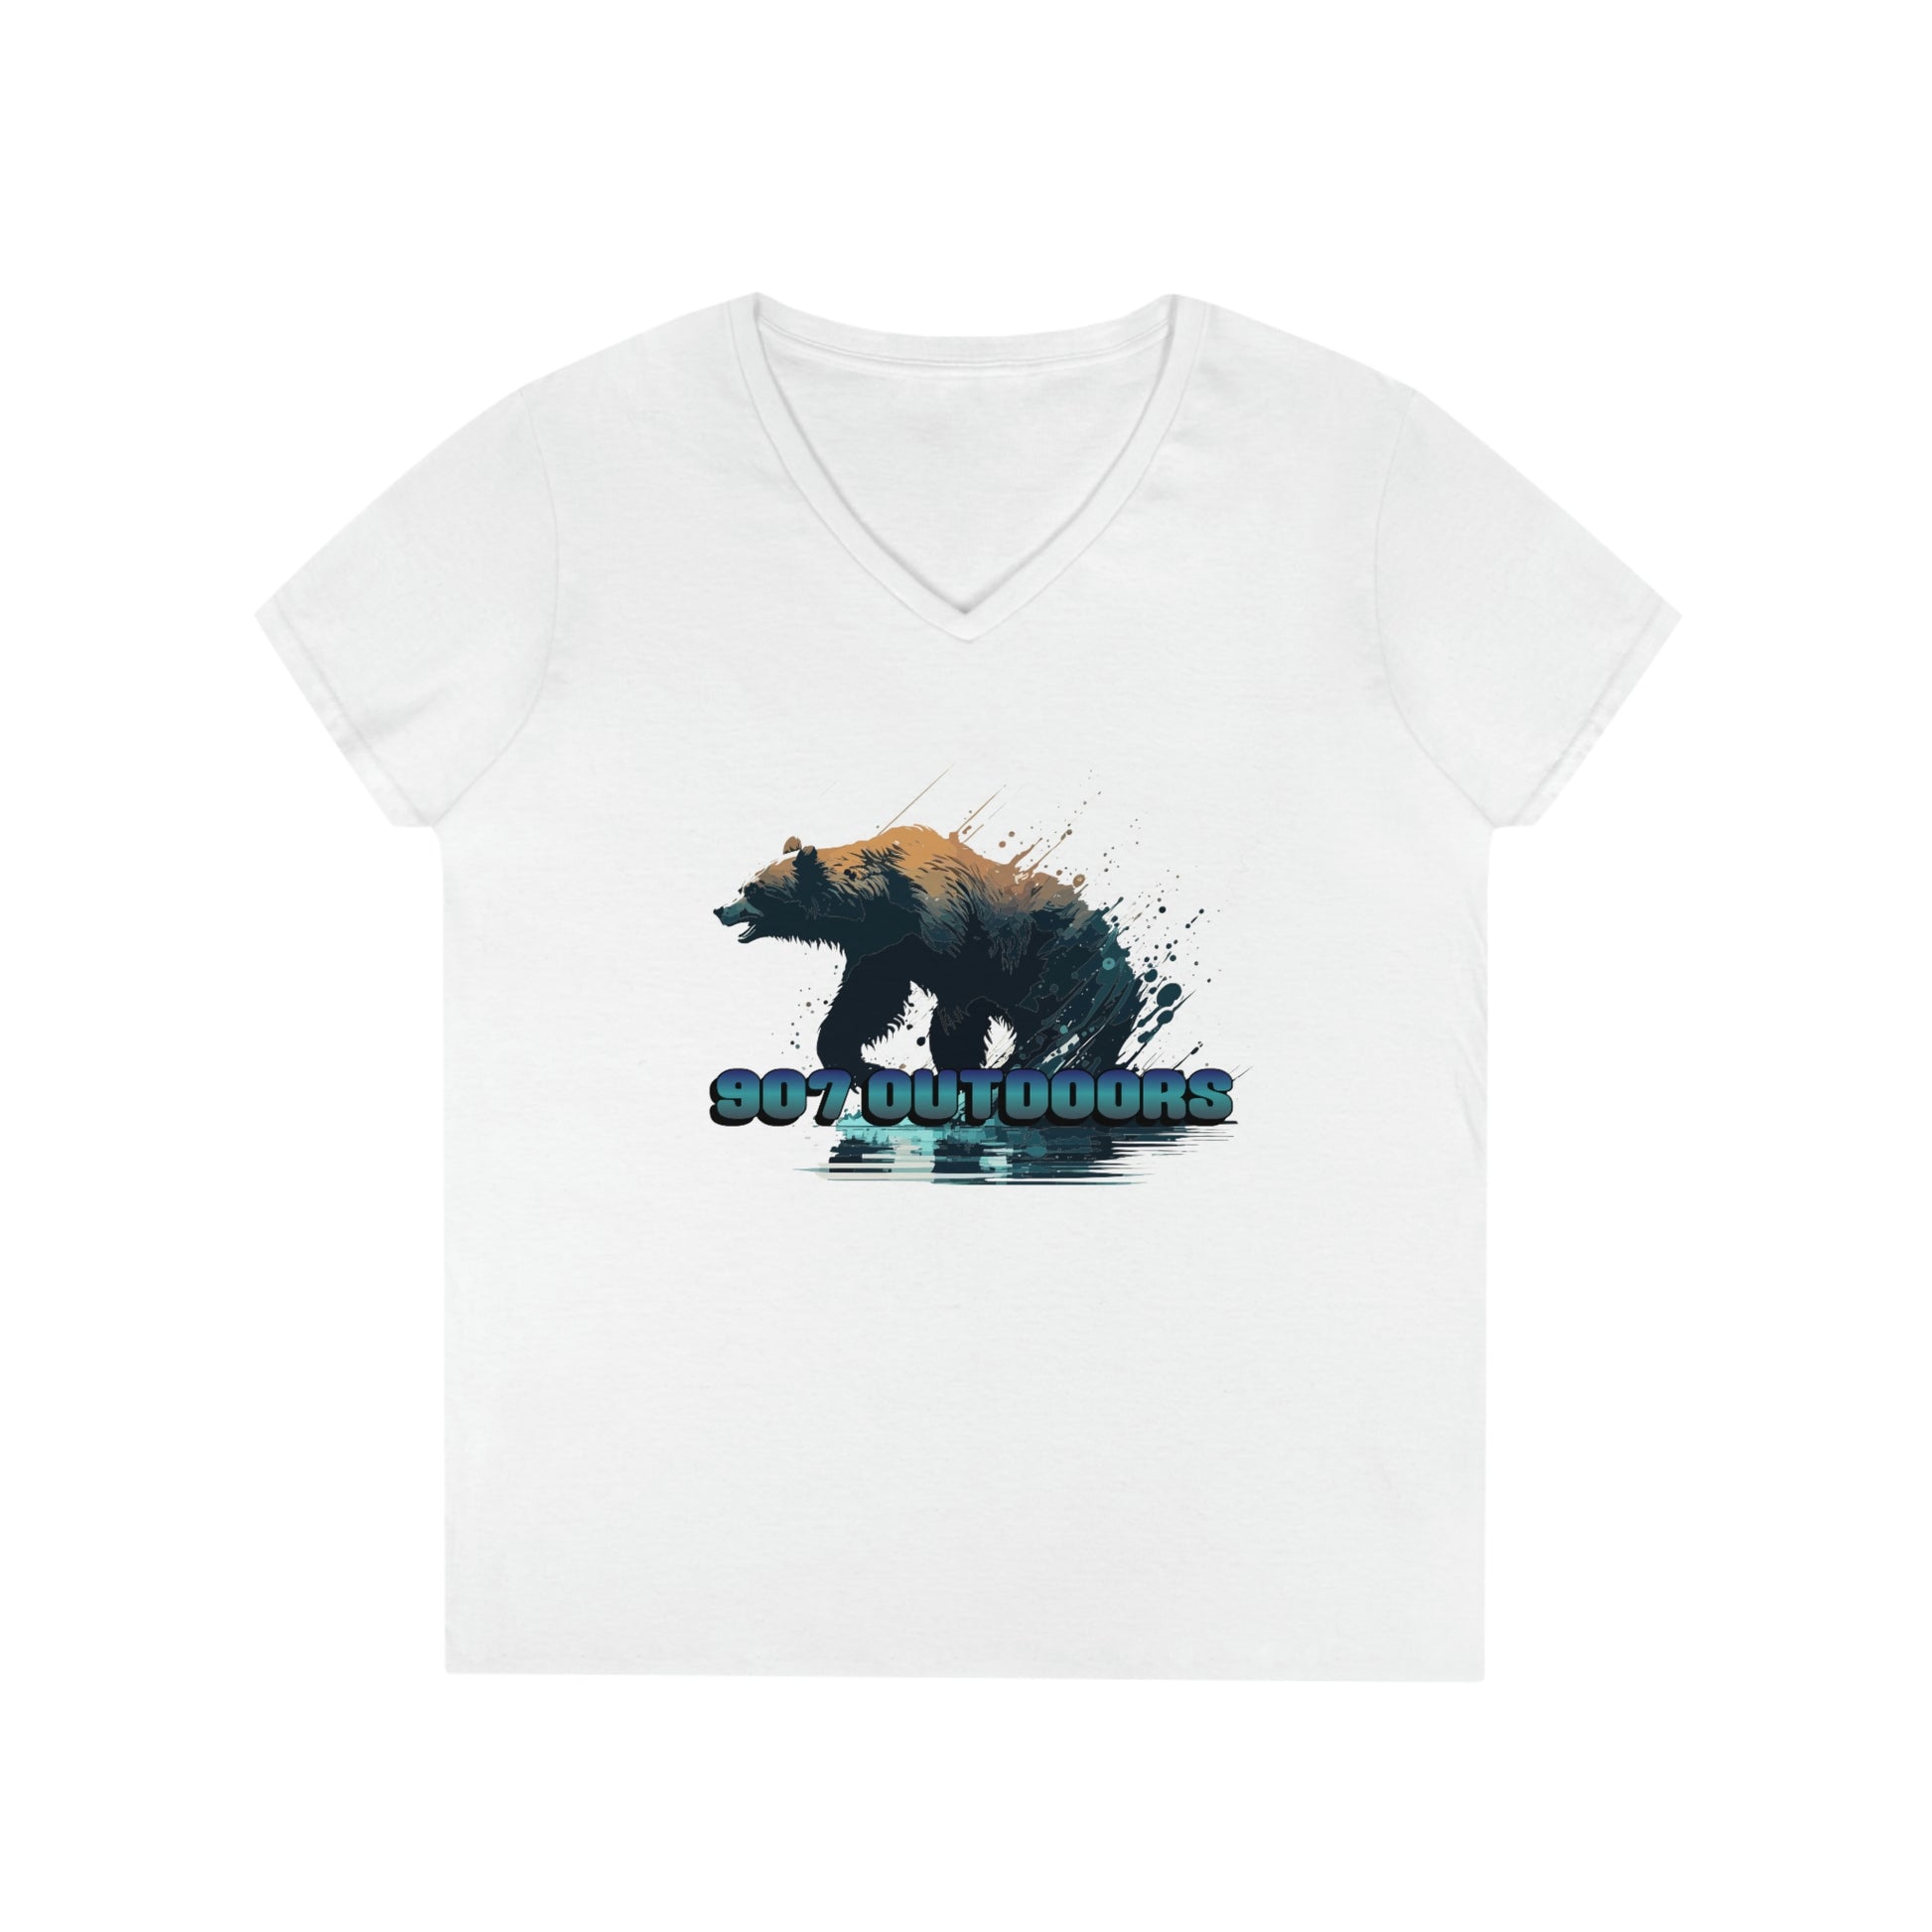 River Bear Ladies' V-Neck T-Shirt - 907Outdoors